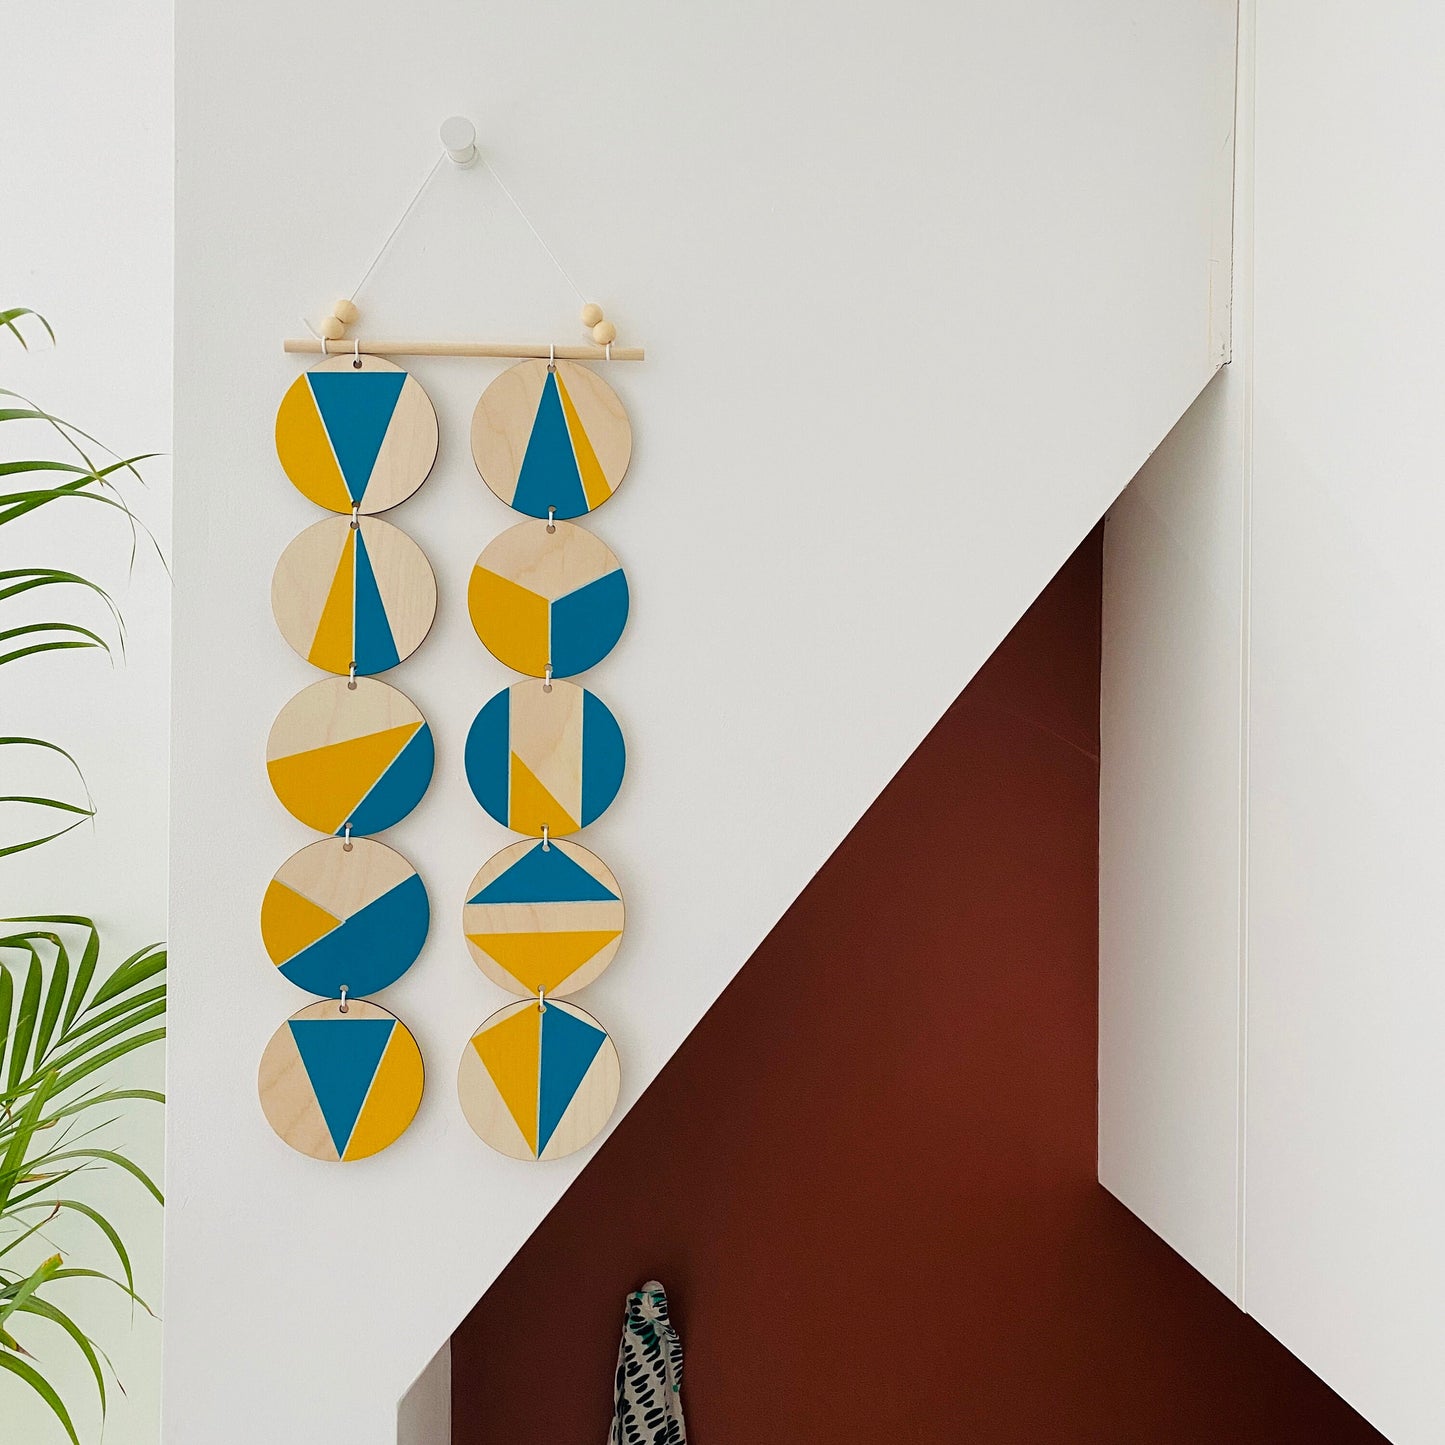 Wall hanging - Colourful Geometric Plywood - Scandi Hygge Boho - Wall Hanging - Wall Art multi - Bright Teal and Yellow Decor